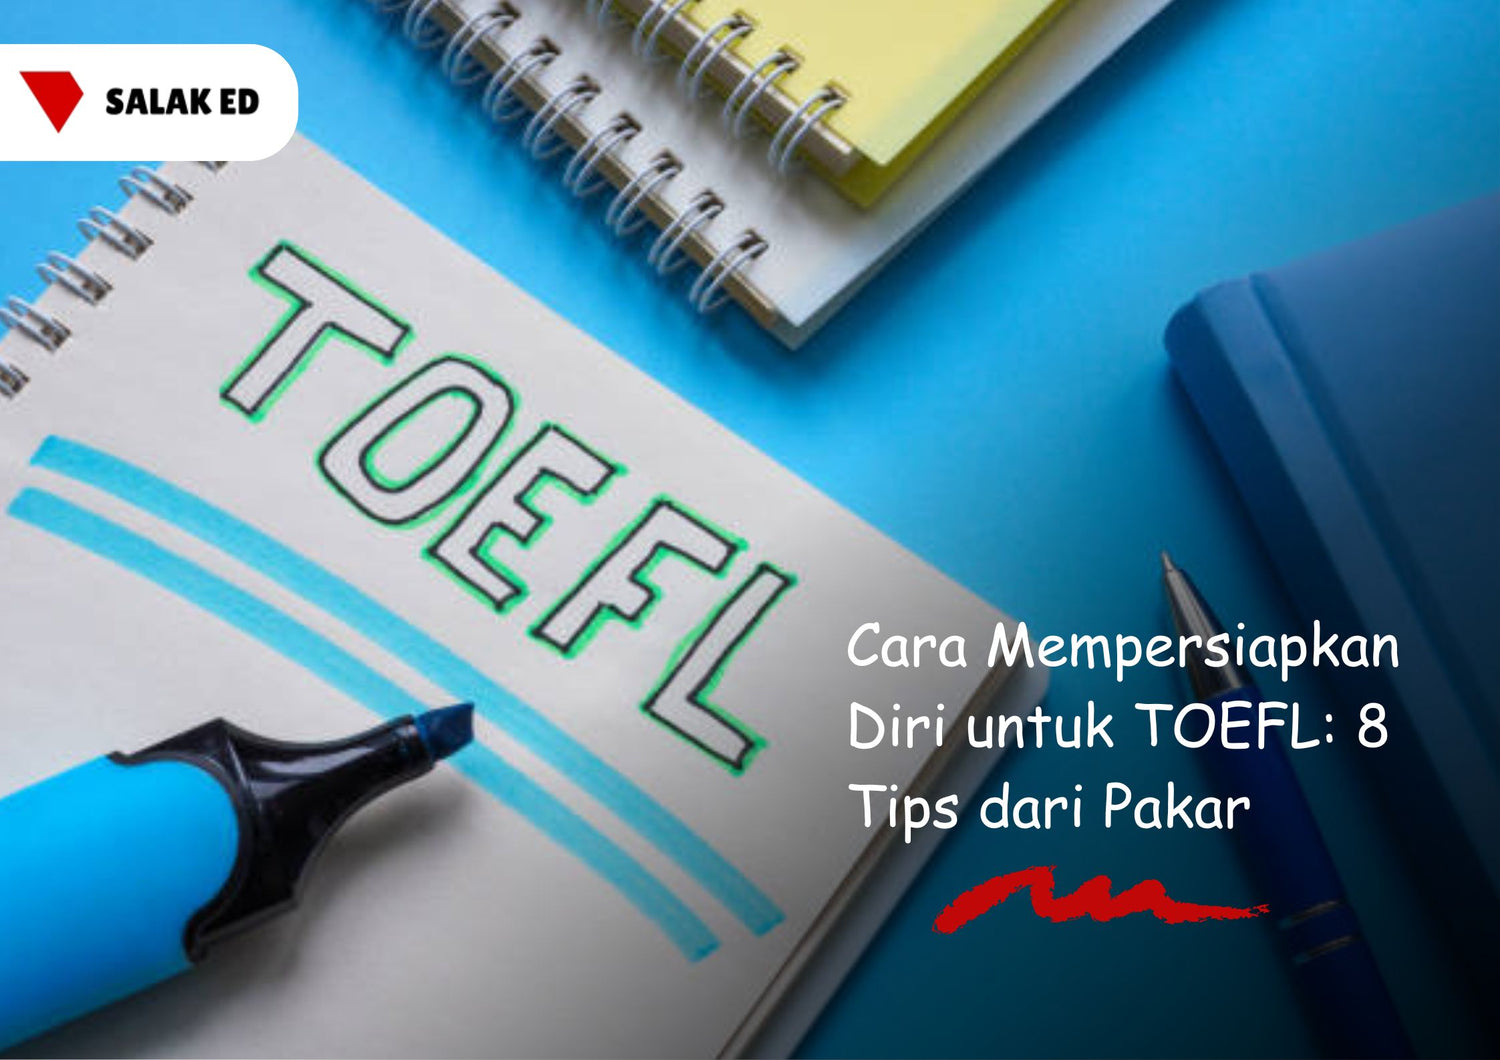 Cara Mempersiapkan Diri untuk TOEFL: 8 Tips dari Pakar